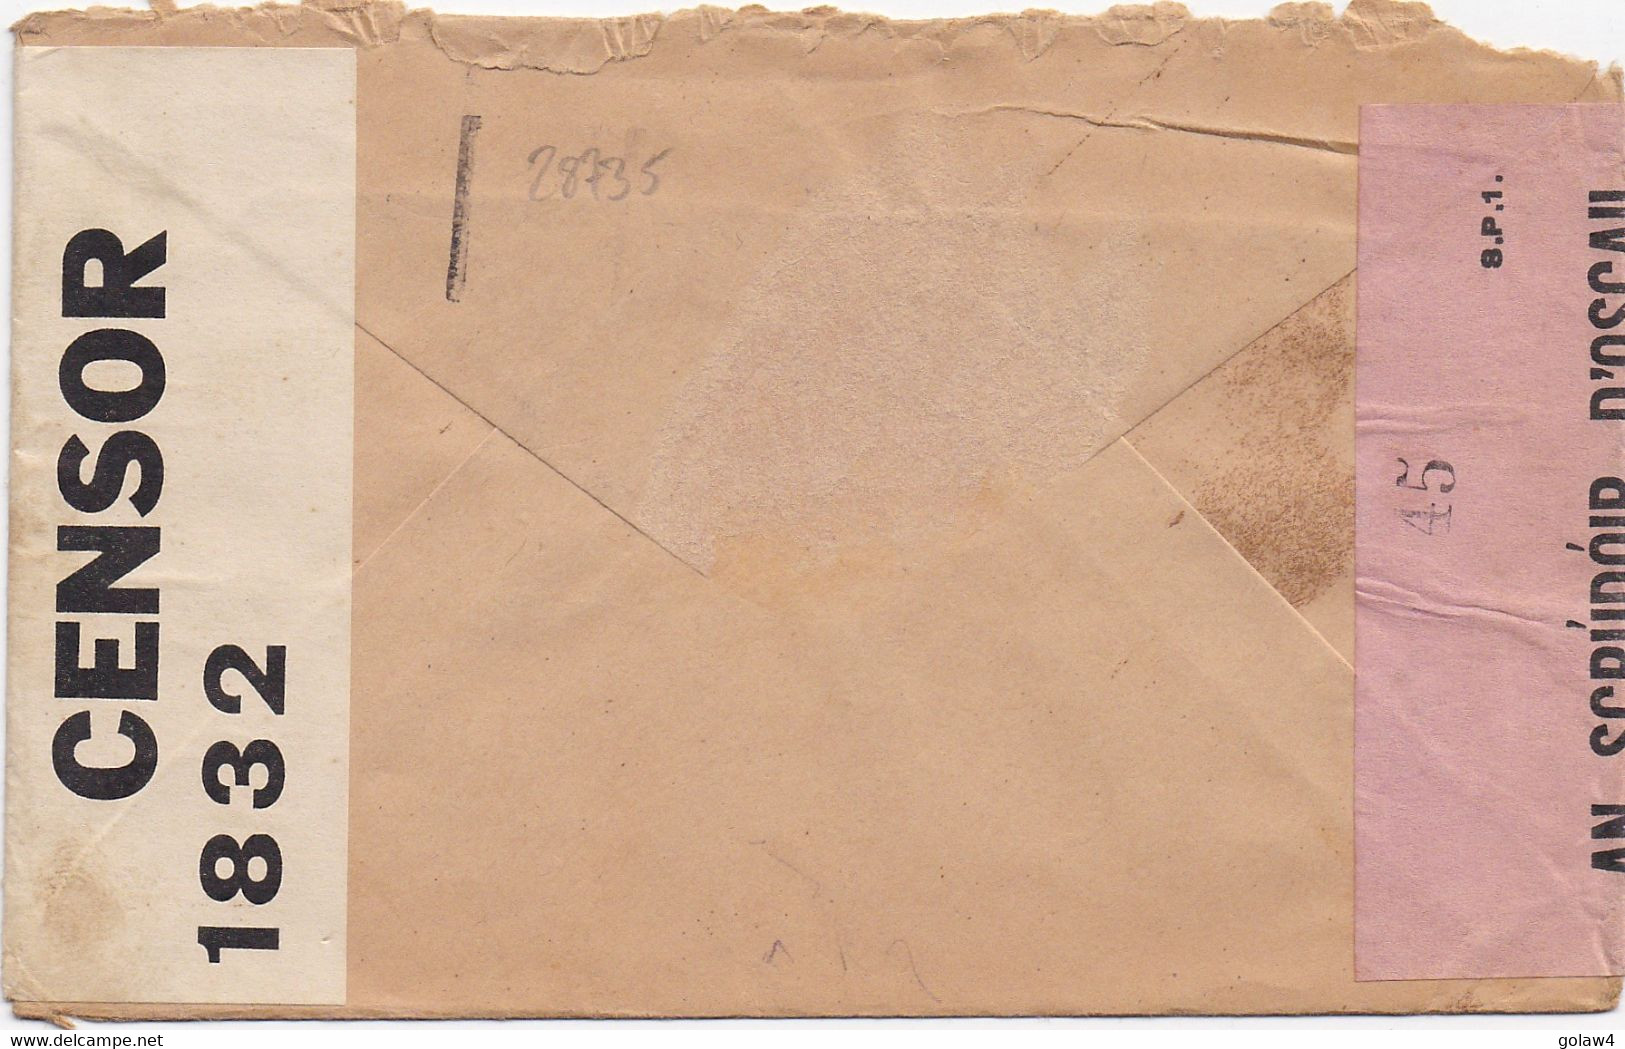 28735# IRLANDE LETTRE CENSURE GAELIQUE AN SCRUDOIR D' OSCAIL OPENED BY CENSOR Obl BAILE ATHA CLIATH 1939 BELGIQUE BELGIE - Storia Postale